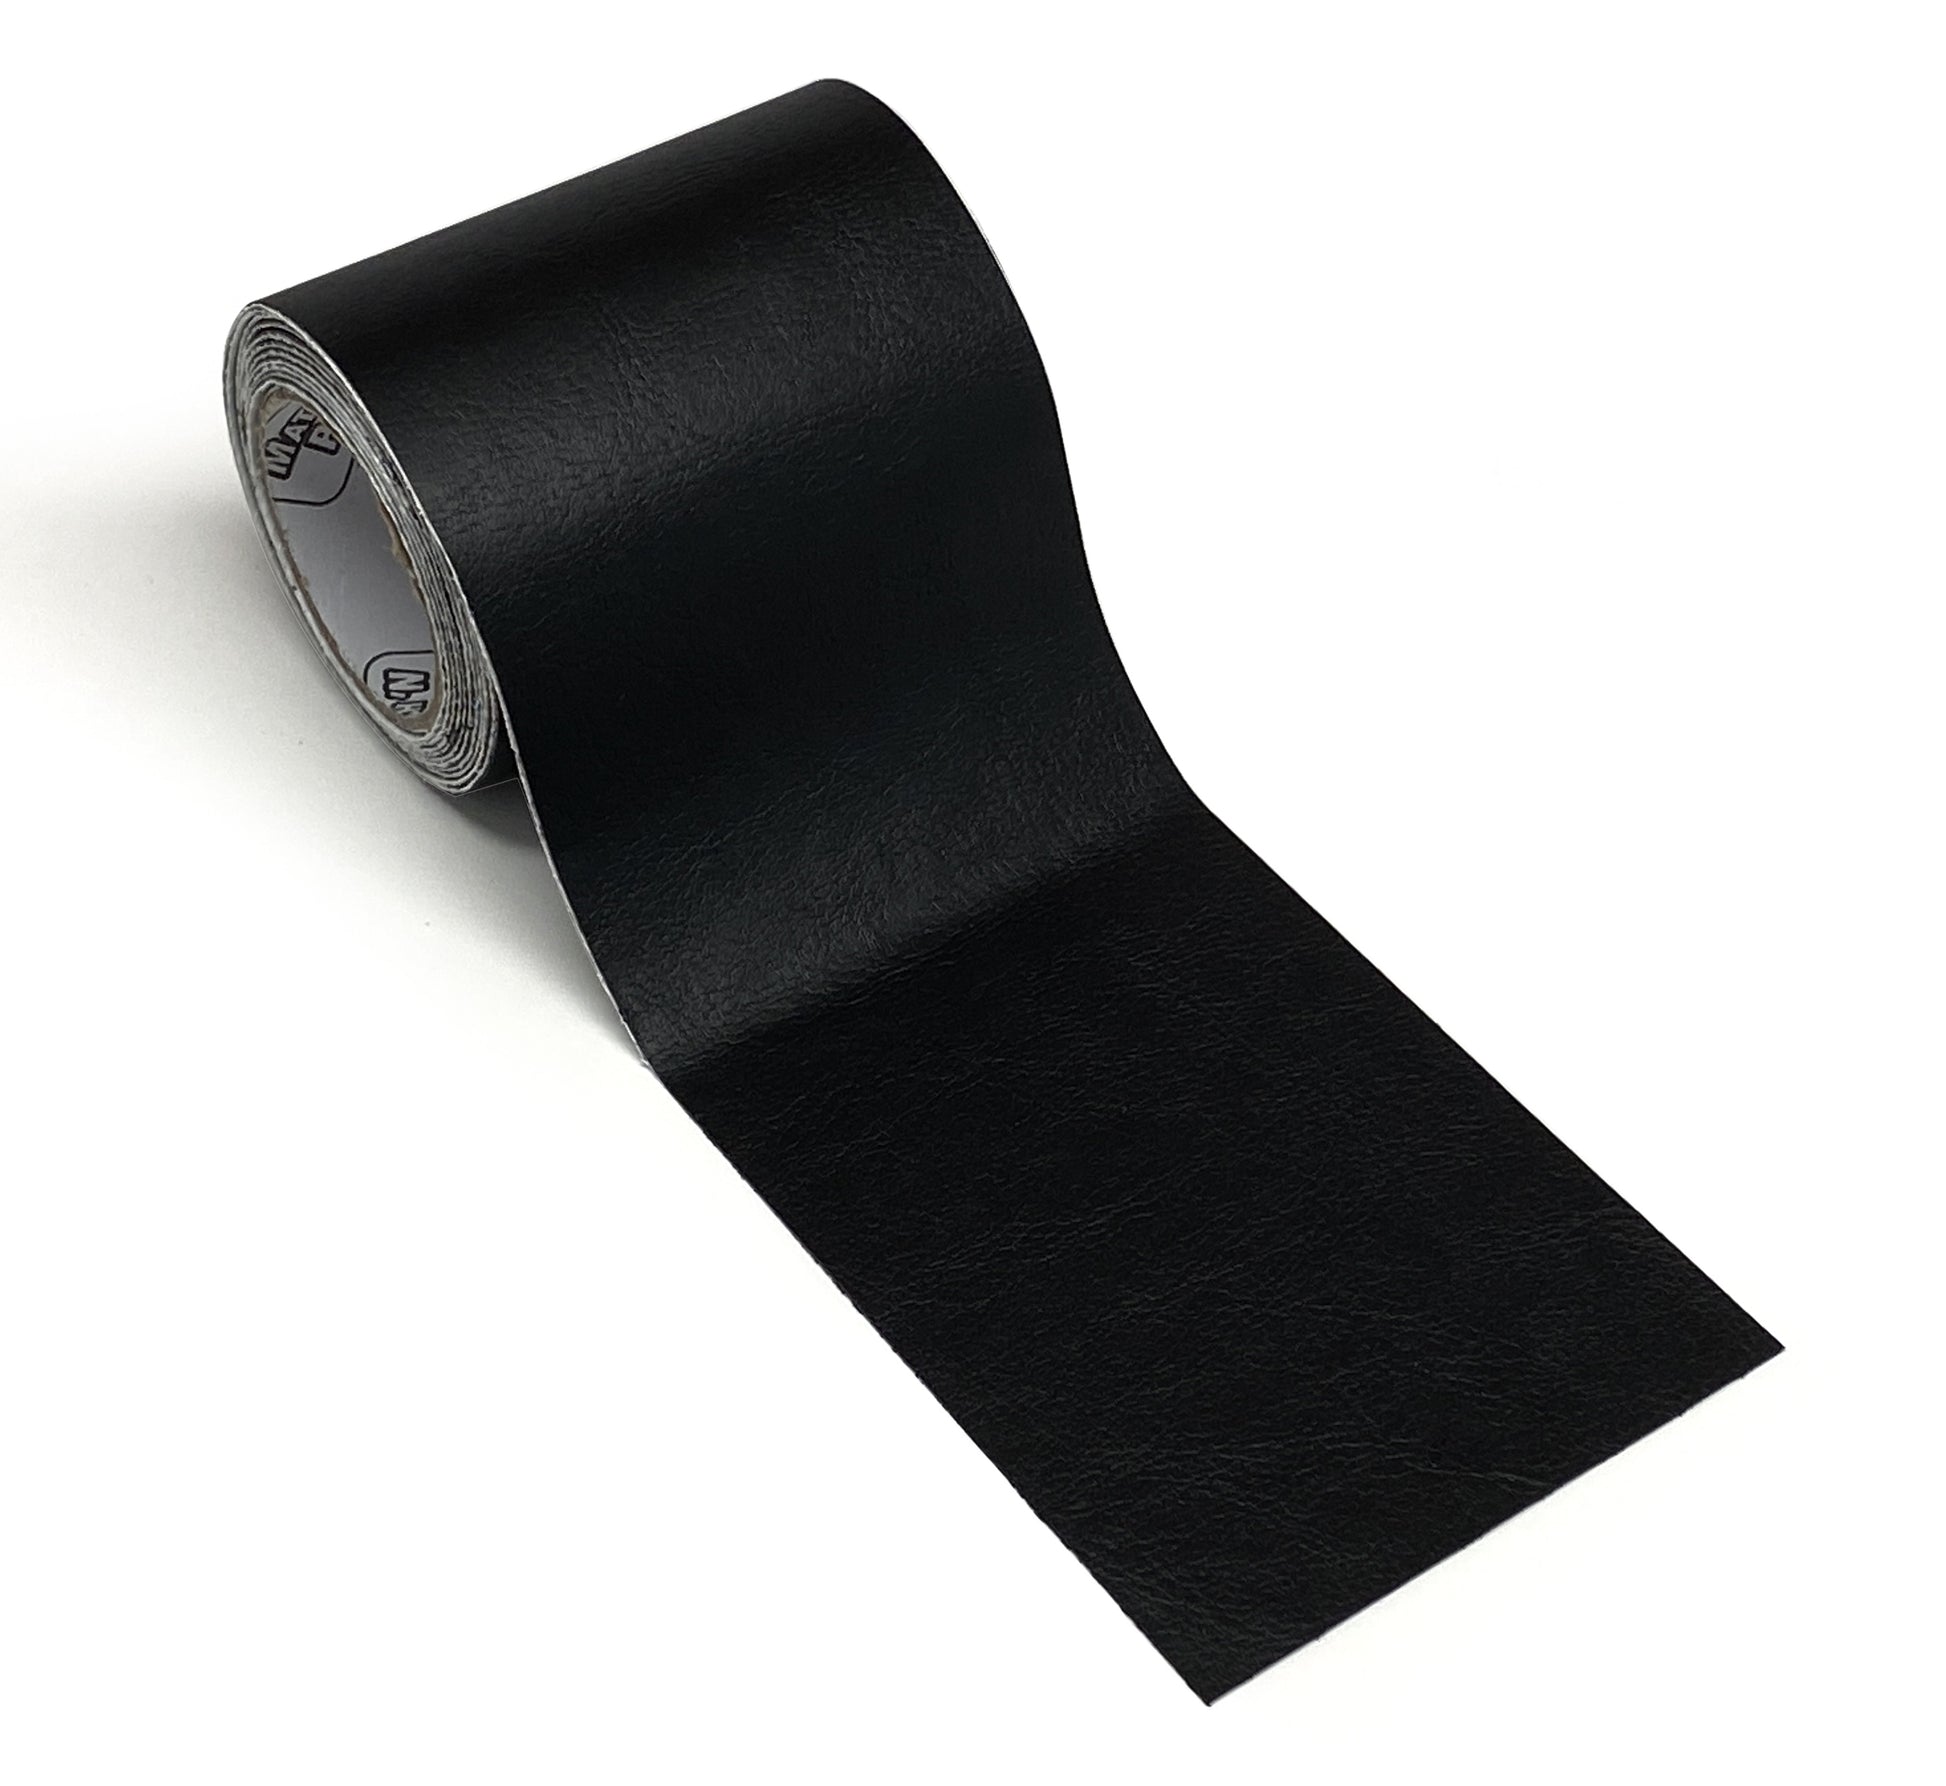 H689.BLACK Self Adhesive Nylon Repair Patch: Black - 10 x 20cm